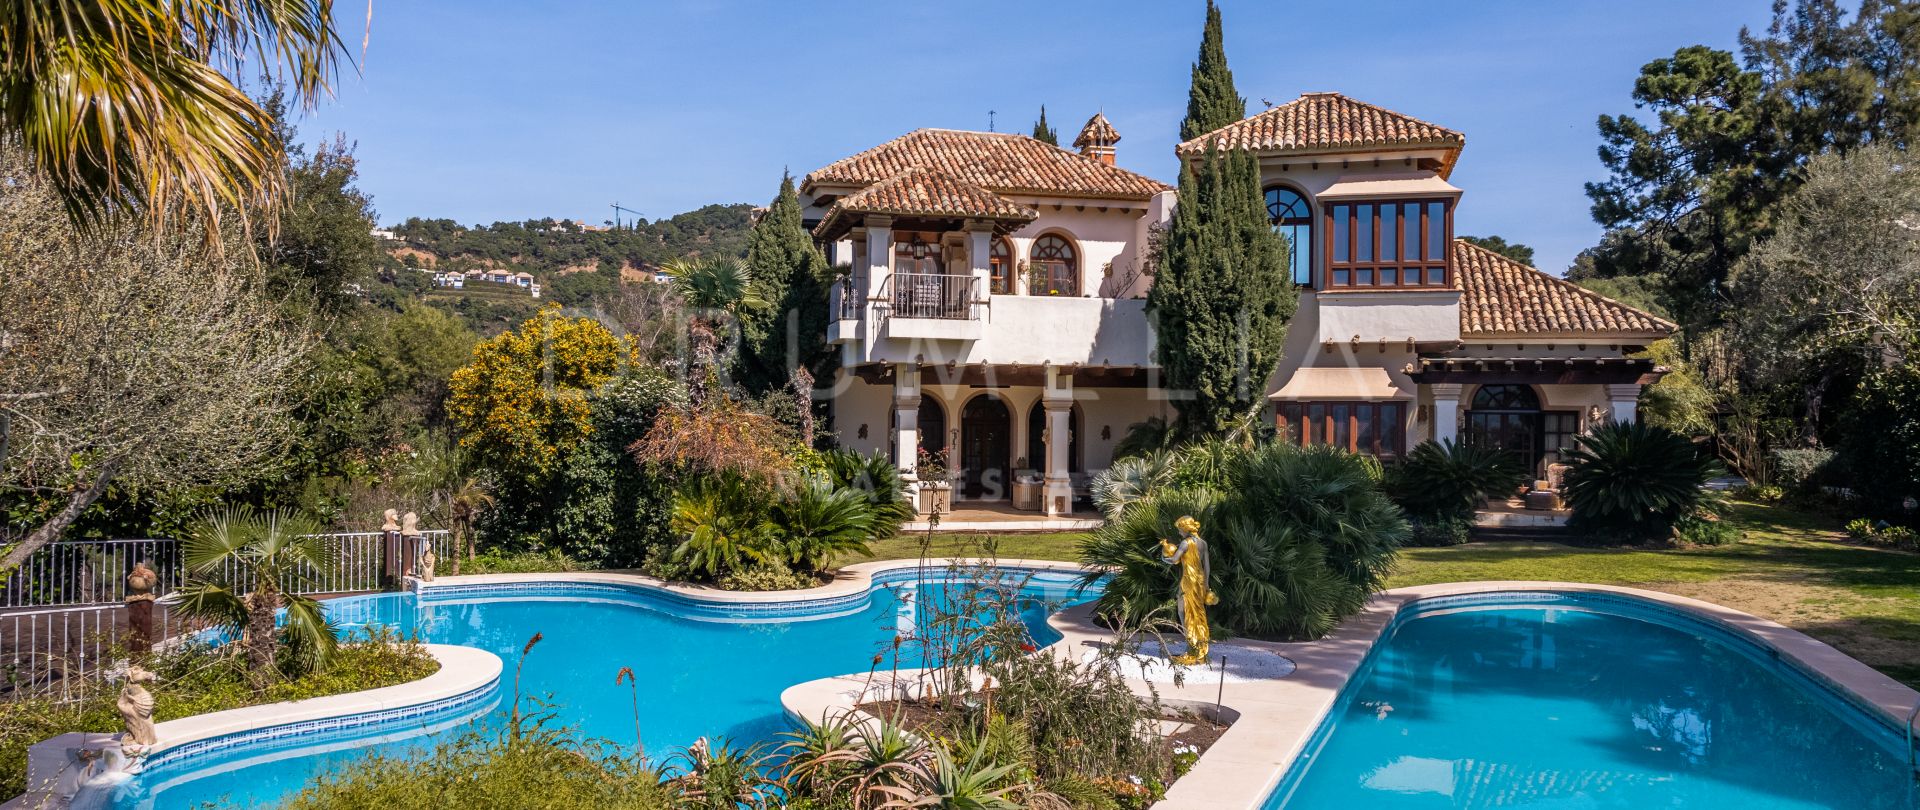 Prachtige mediterrane villa in klassieke stijl te koop in het fabelachtige La Zagaleta, Benahavis